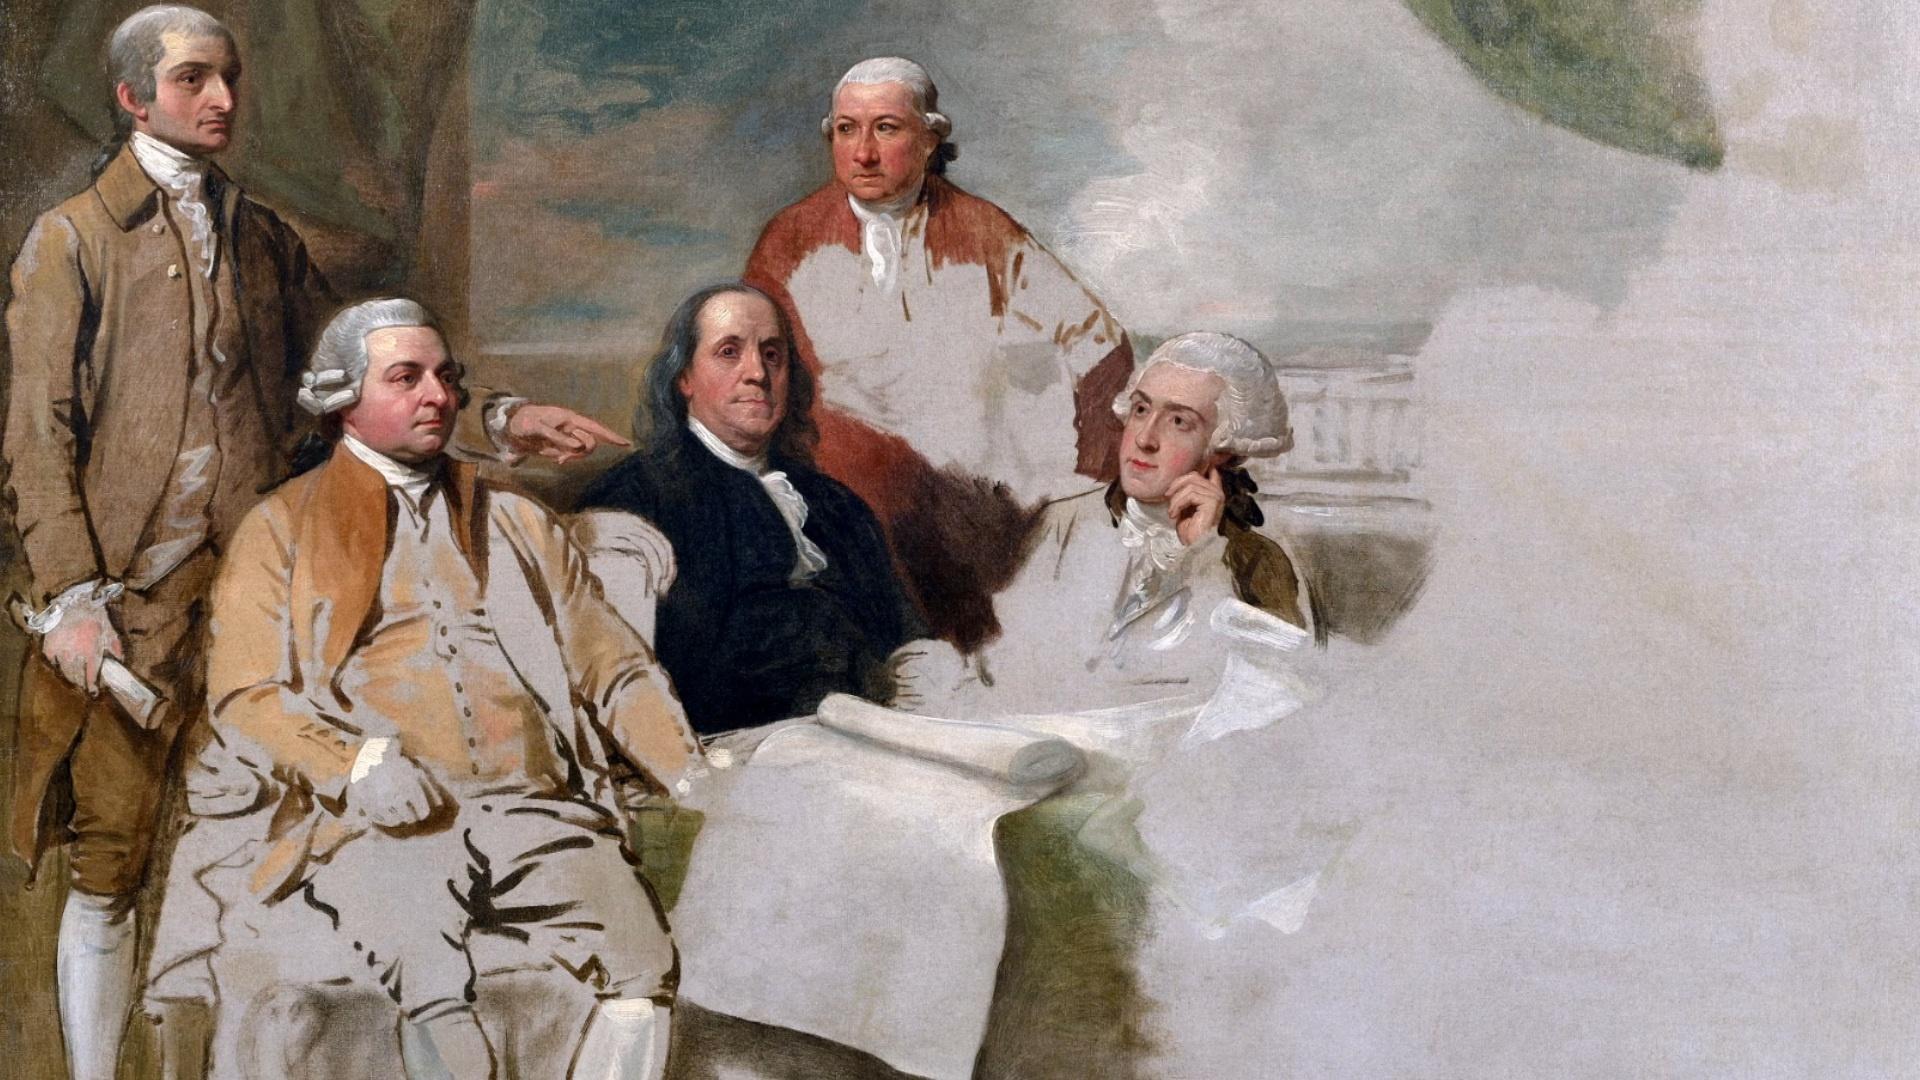 Benjamin Franklin, Spanish Version, “An American” (1775-1790), Episode 4